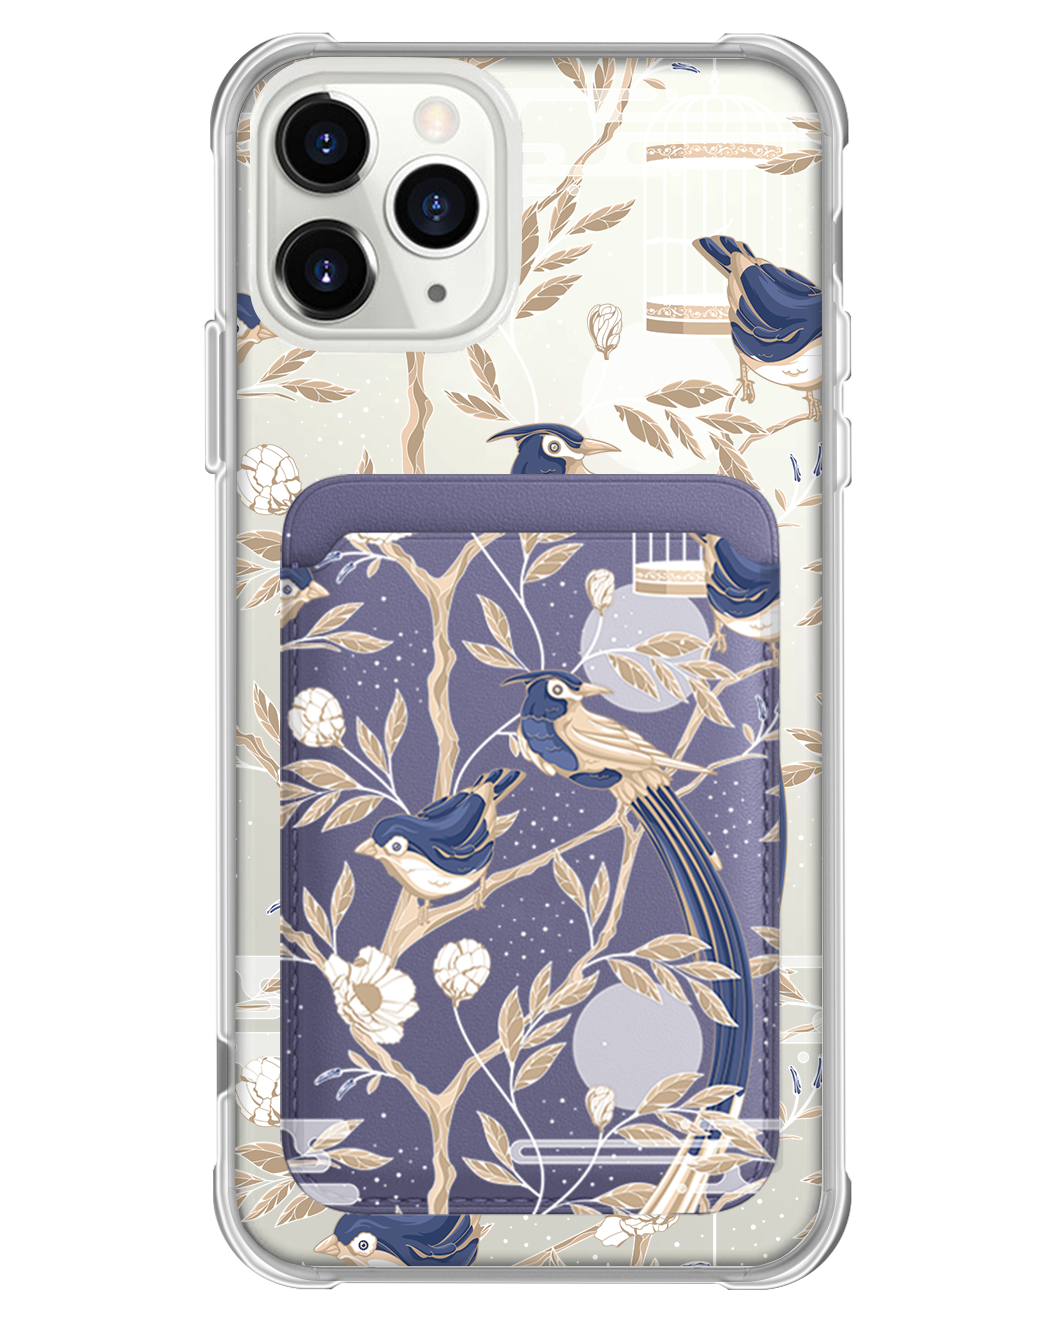 iPhone Magnetic Wallet Case - Lovebird 1.0